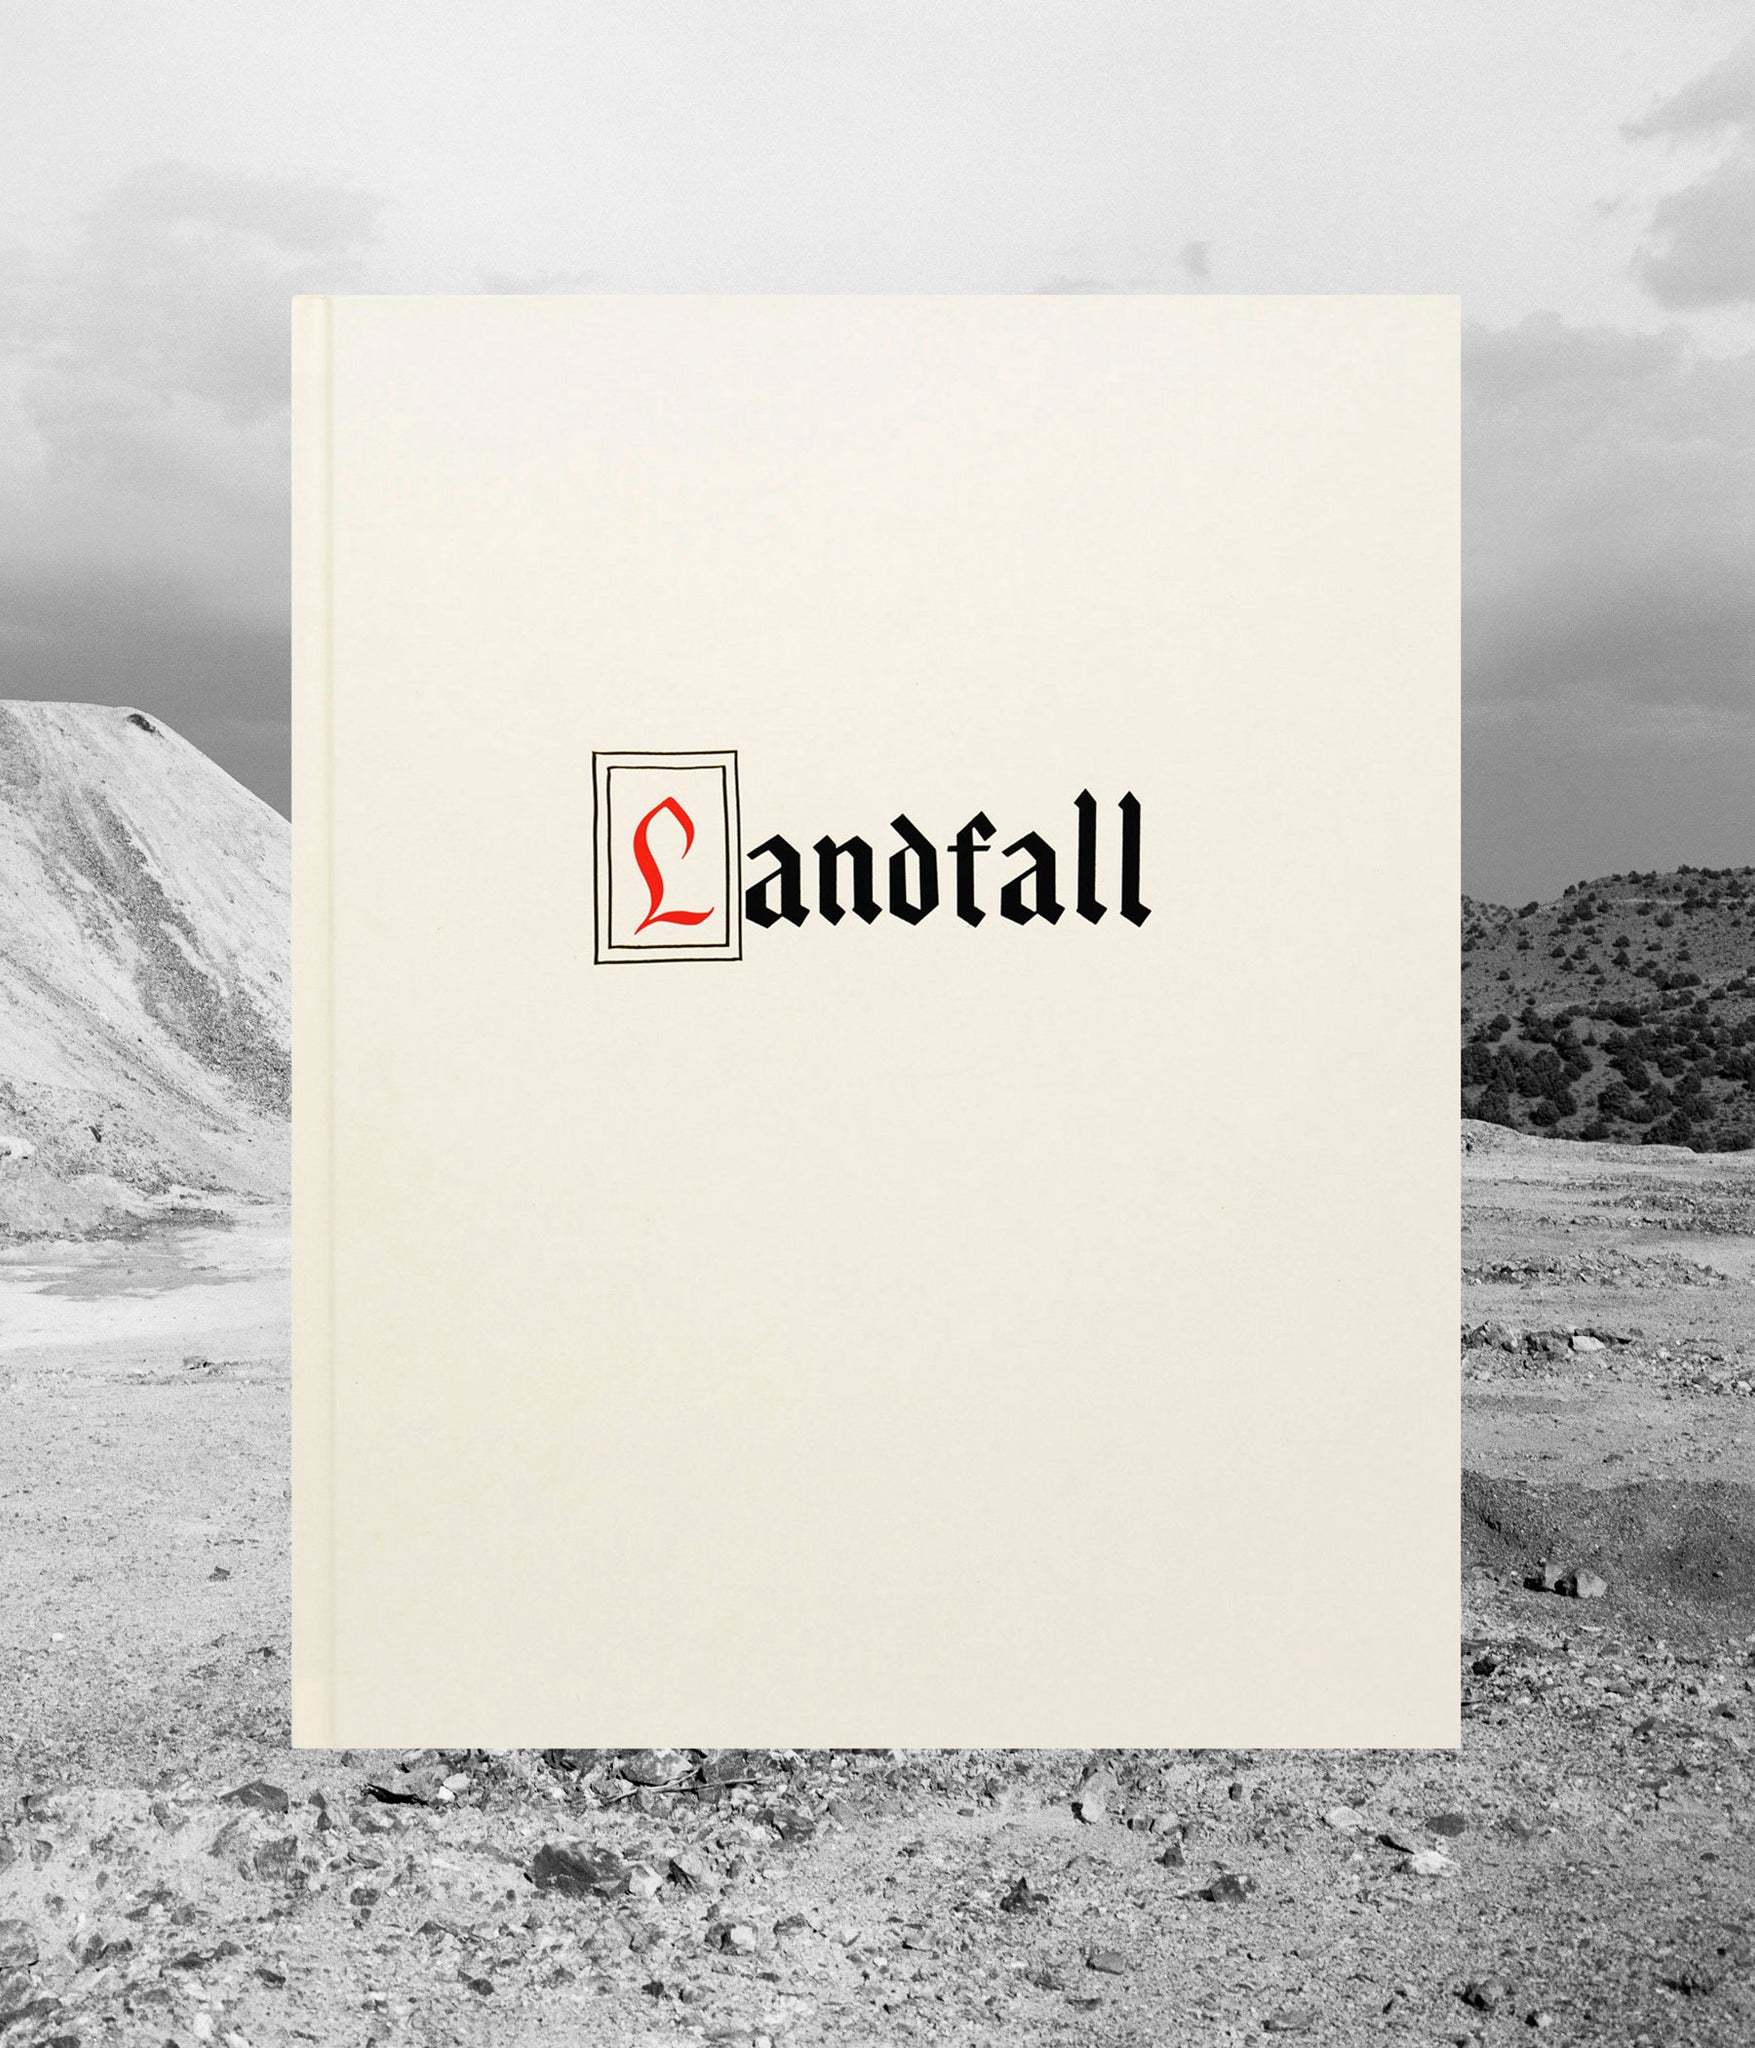 Landfall (Web Test)